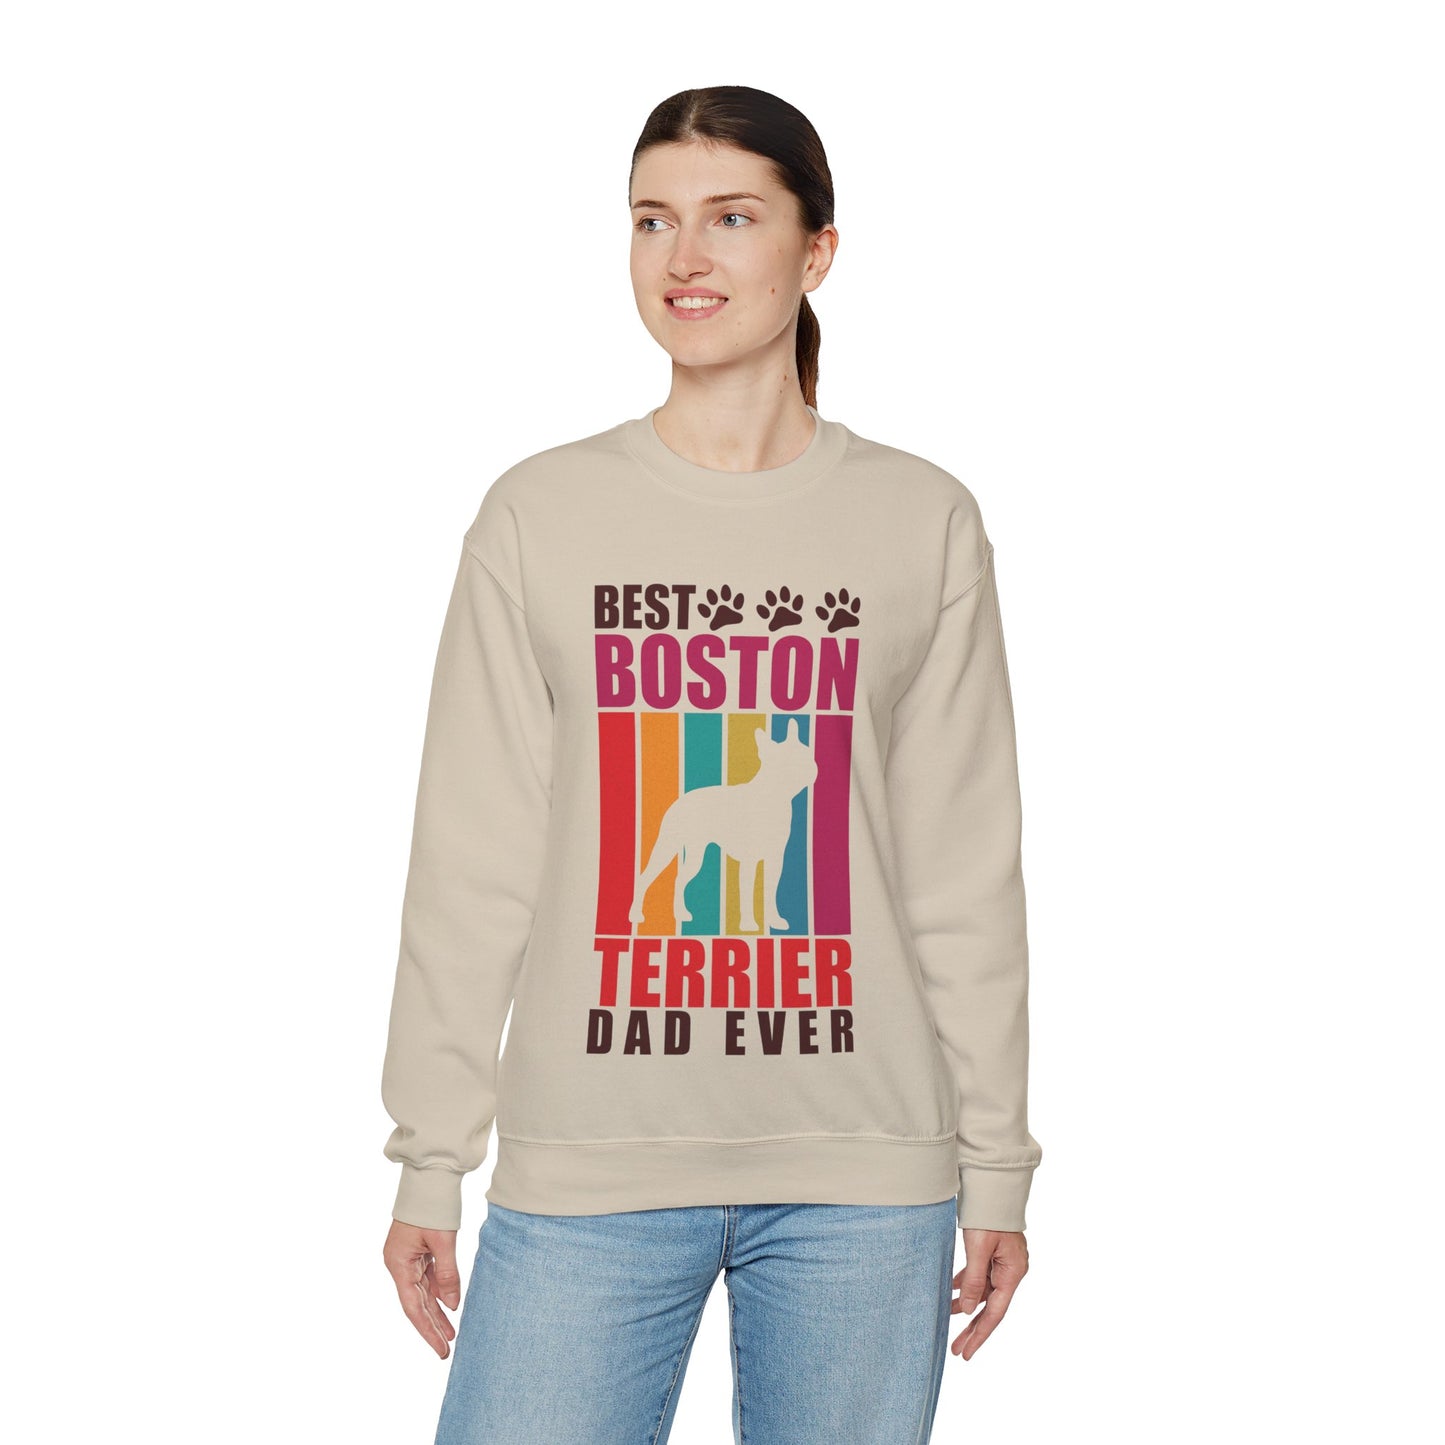 Petey- Unisex Sweatshirt for Boston Terrier lovers